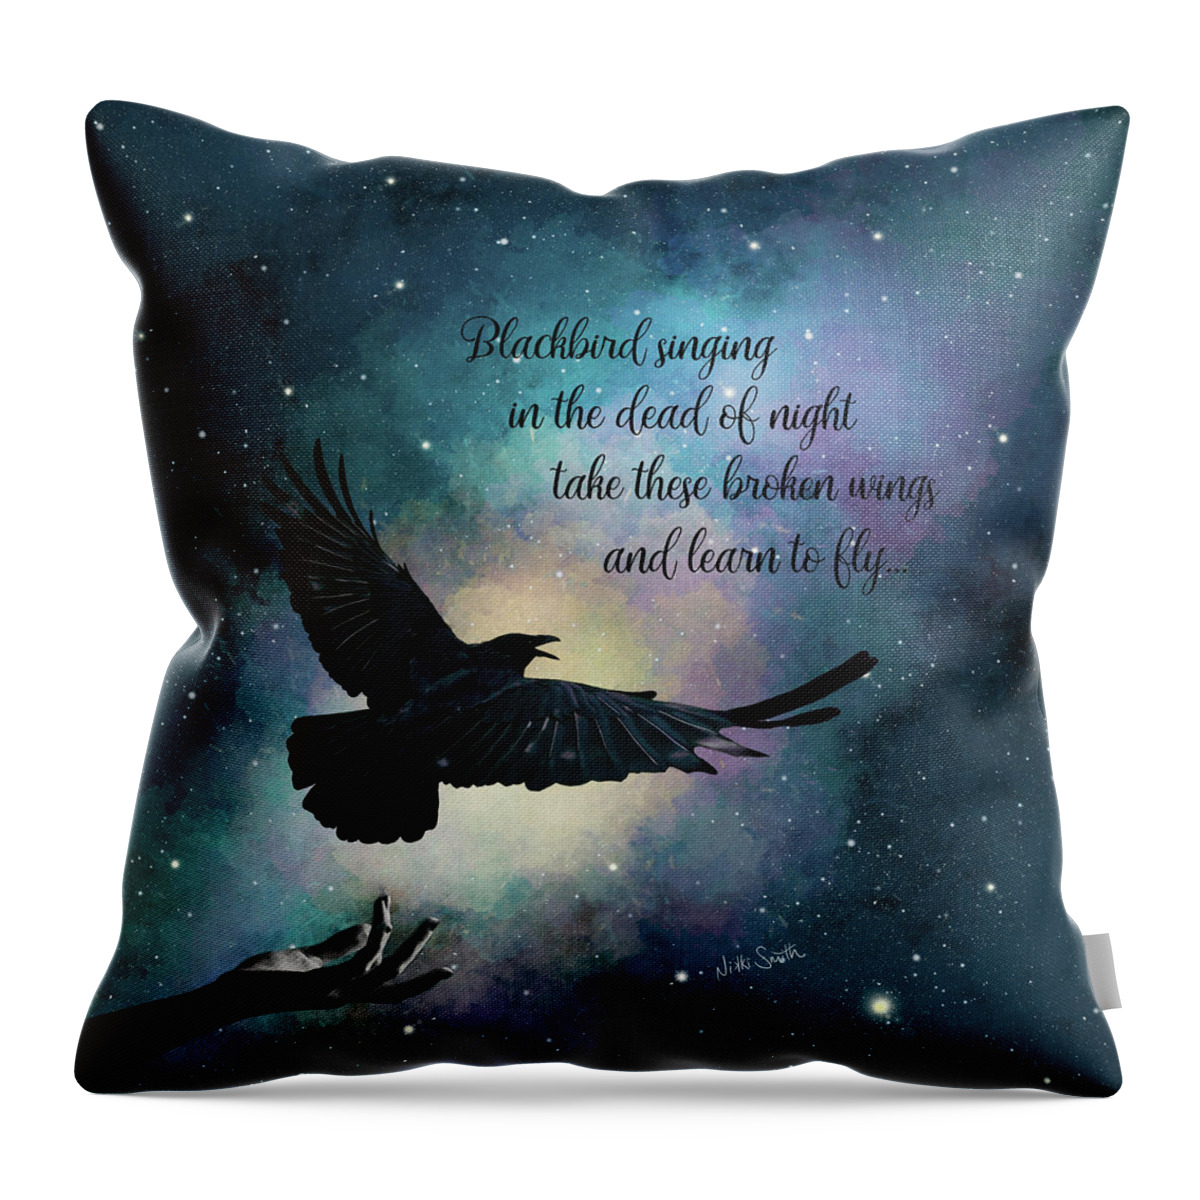 The Beatles Throw Pillow featuring the digital art Blackbird Singing With Lyrics by Nikki Marie Smith